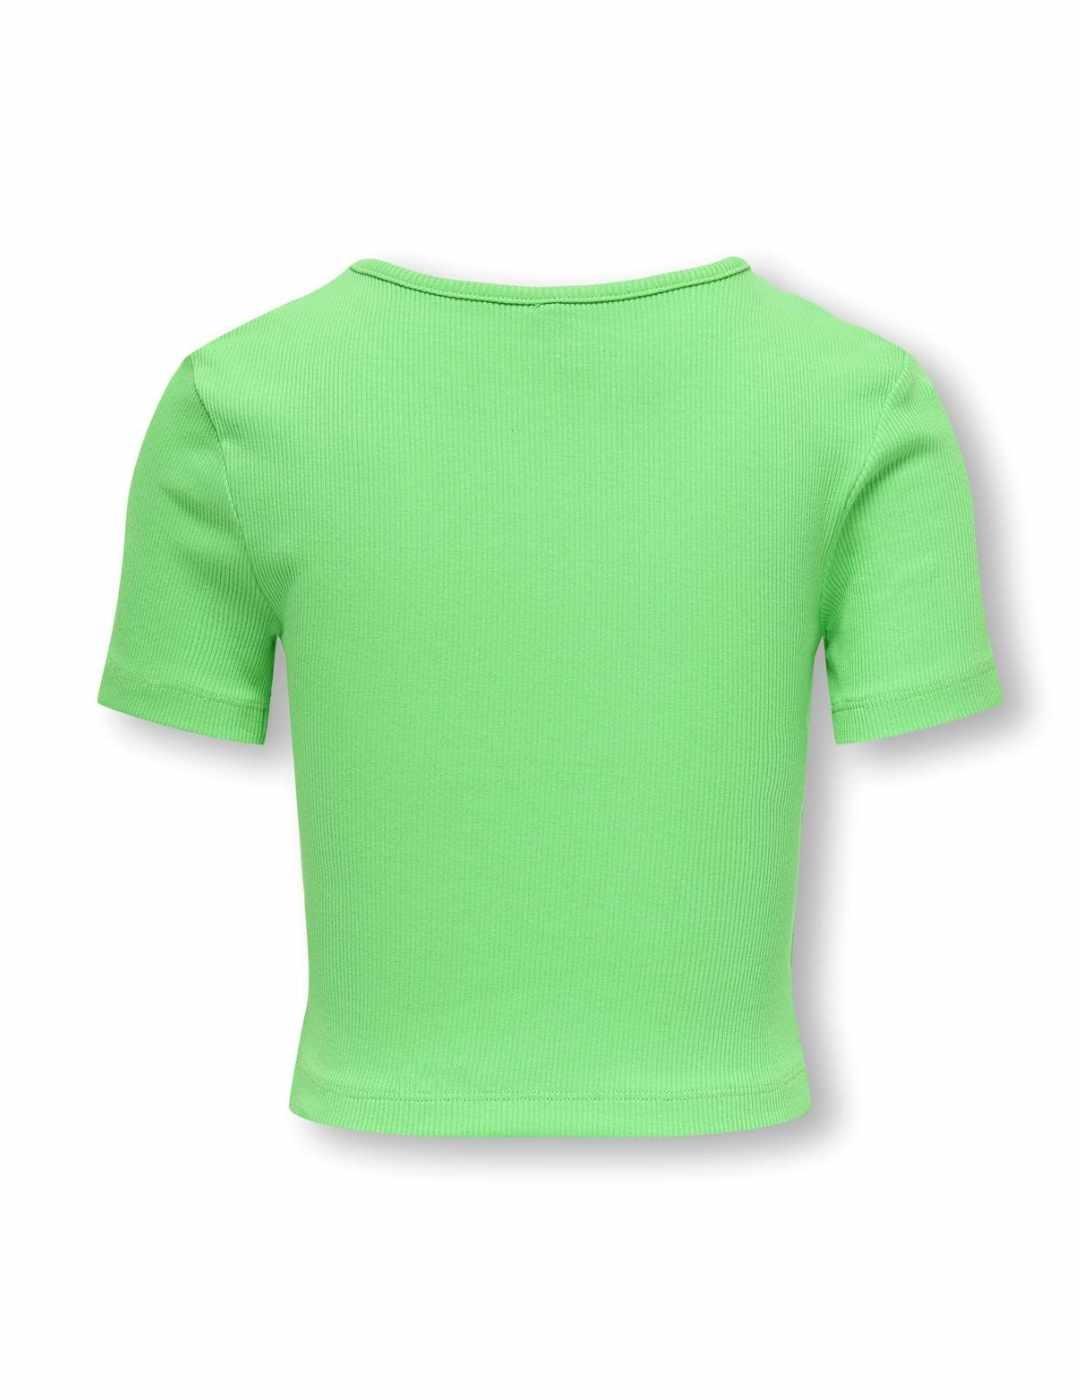 Camiseta Only Kids Nessa verde manga corta para niña